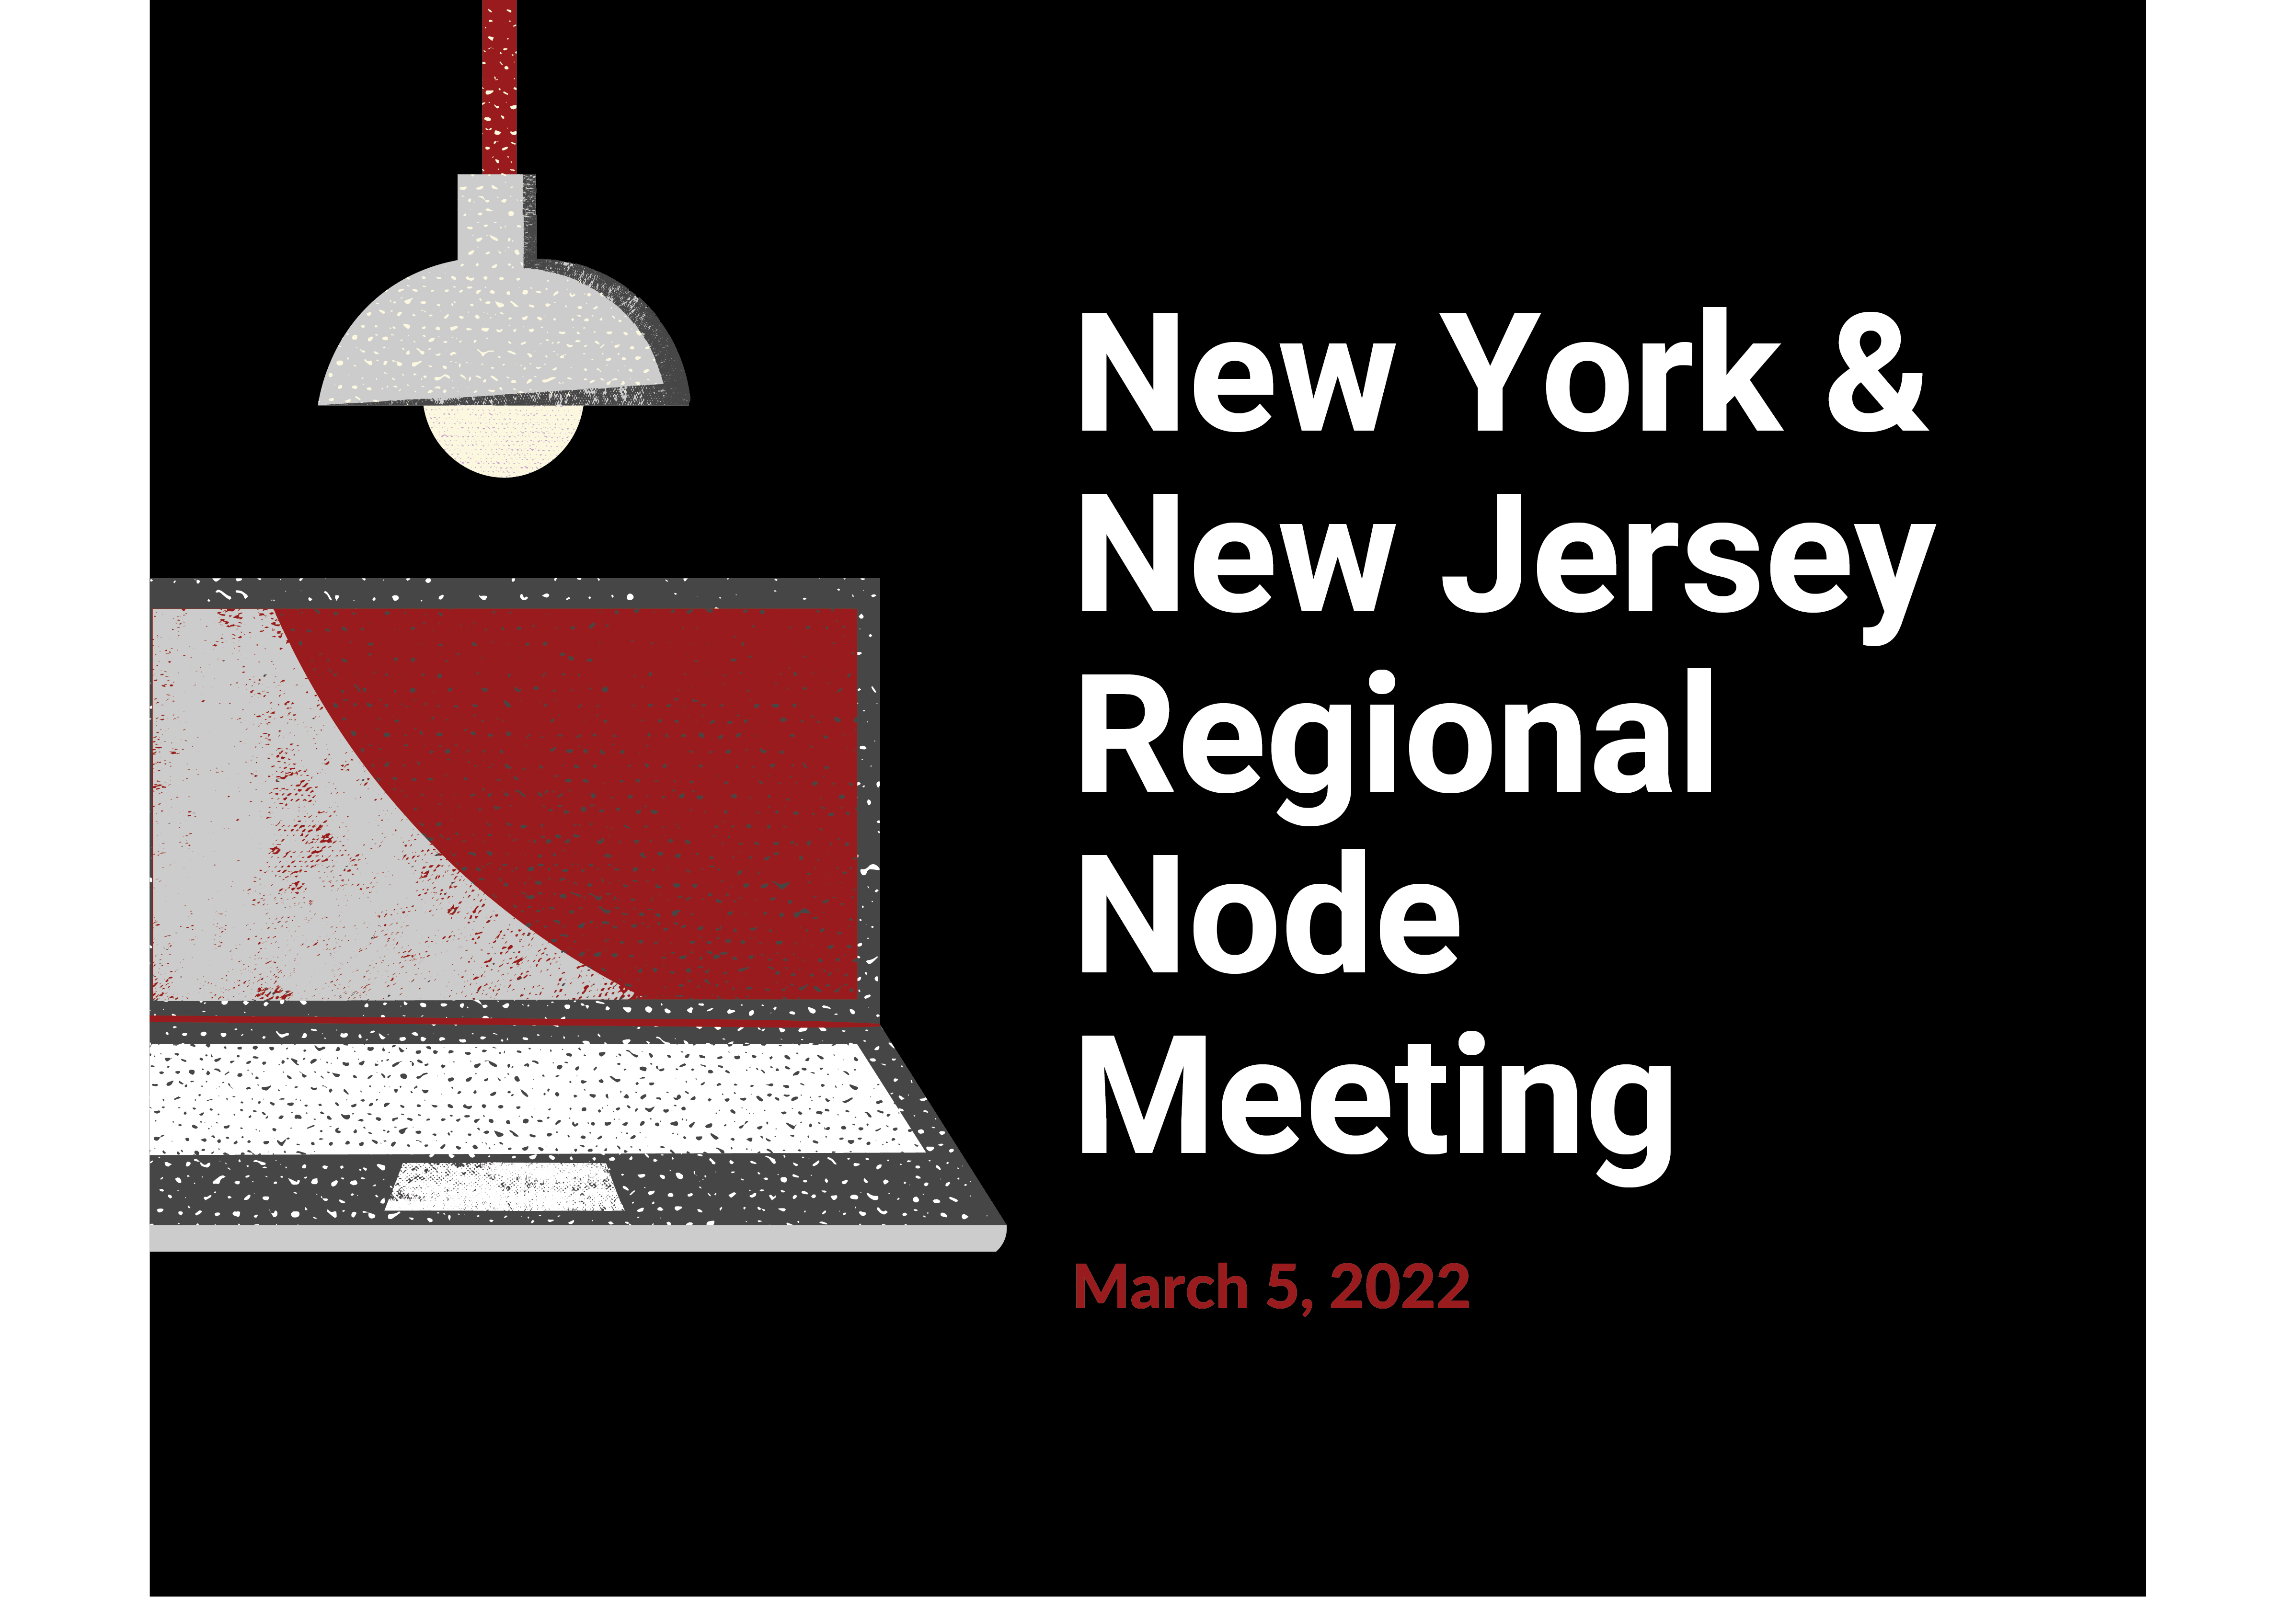 New York & New Jersey Regional Node Meeting March 5, 2022